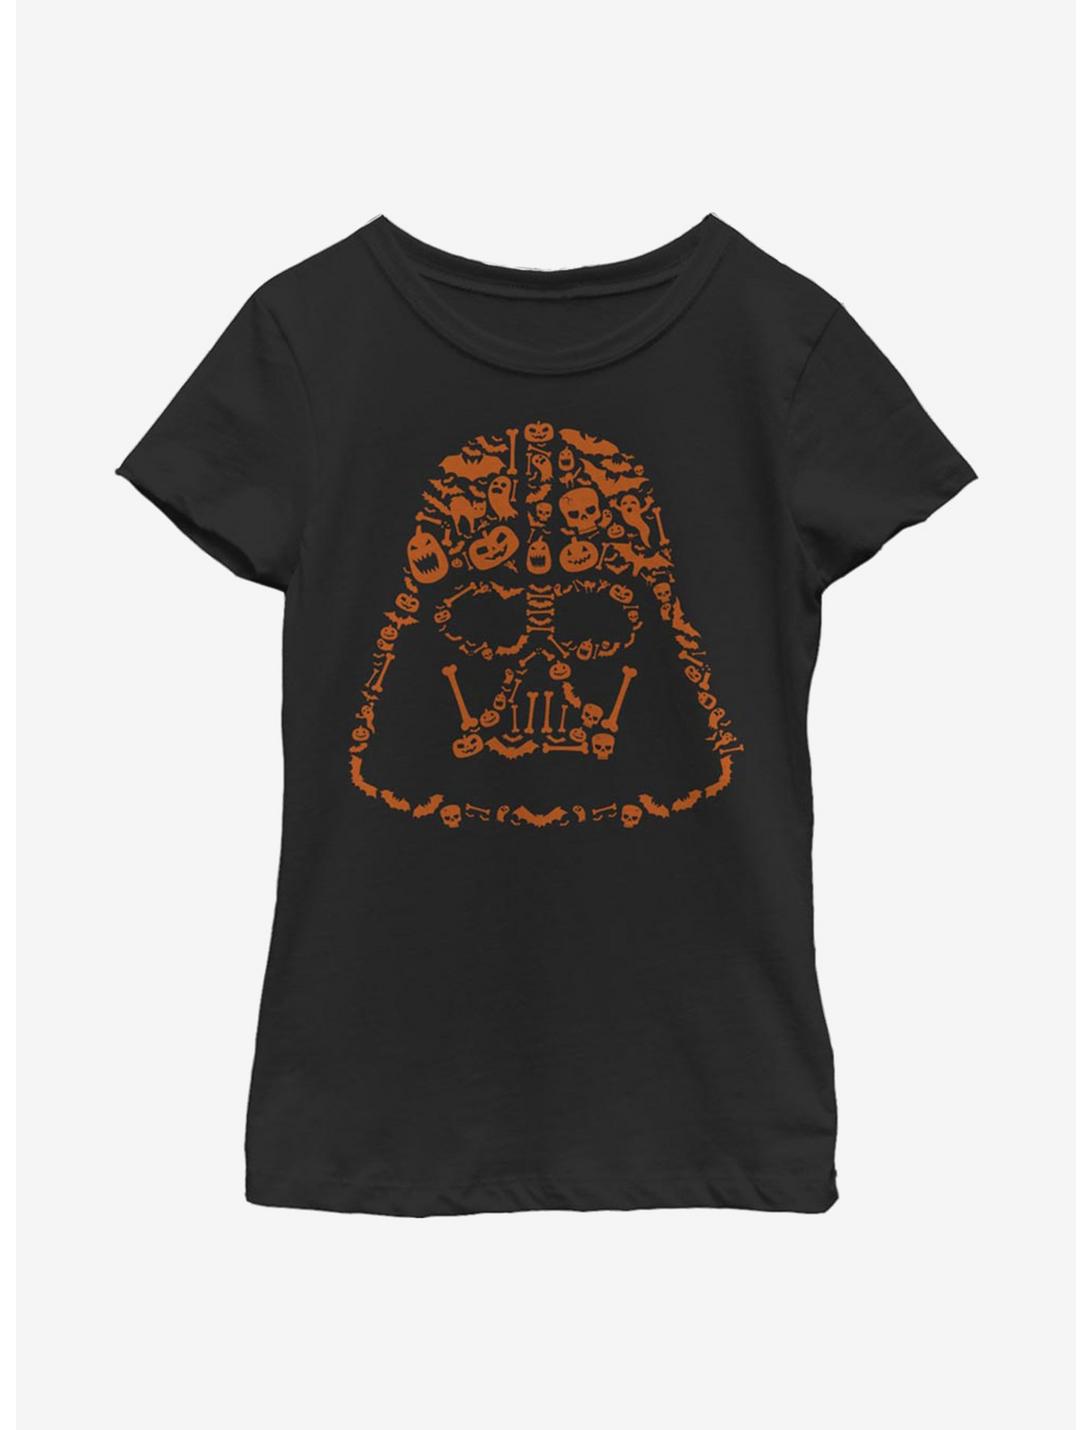 Star Wars Darth Vader Jackolanterns Youth Girls T-Shirt, BLACK, hi-res